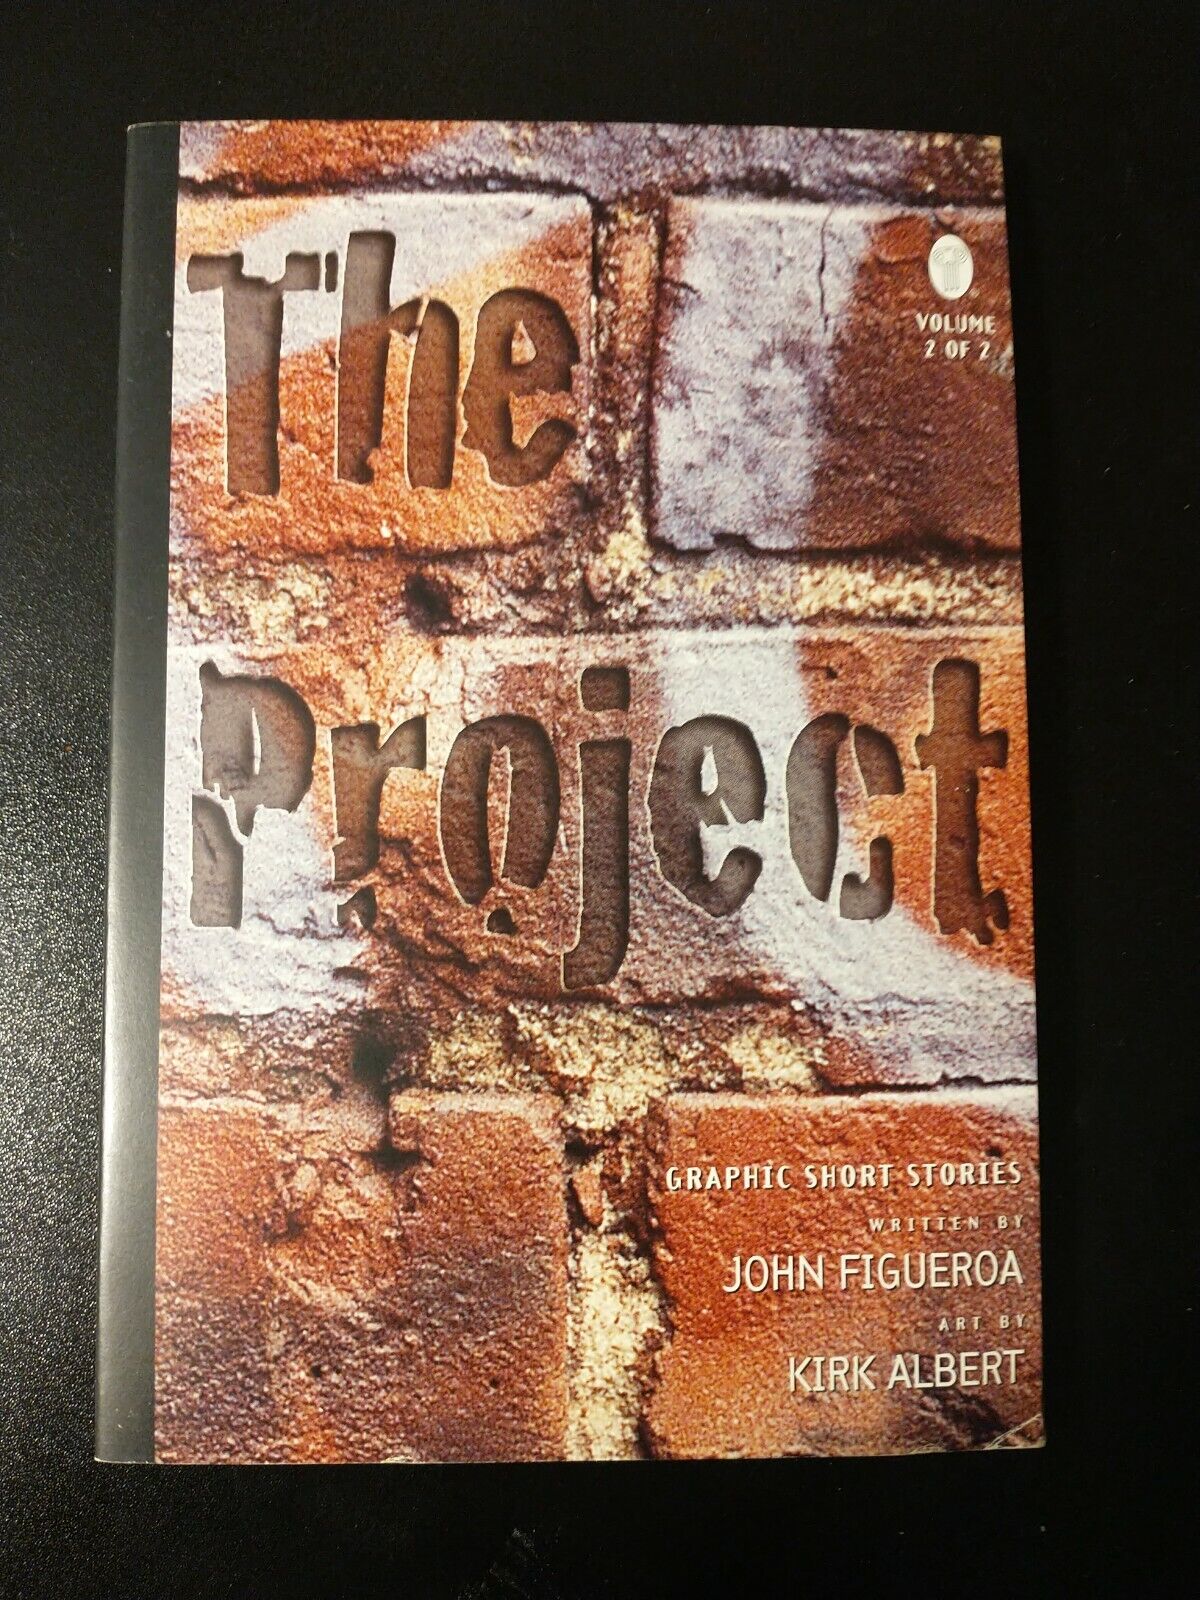 The Project Graphic Short Stories SC TPB/John Figueroa/Kirk Albert/Paradox 